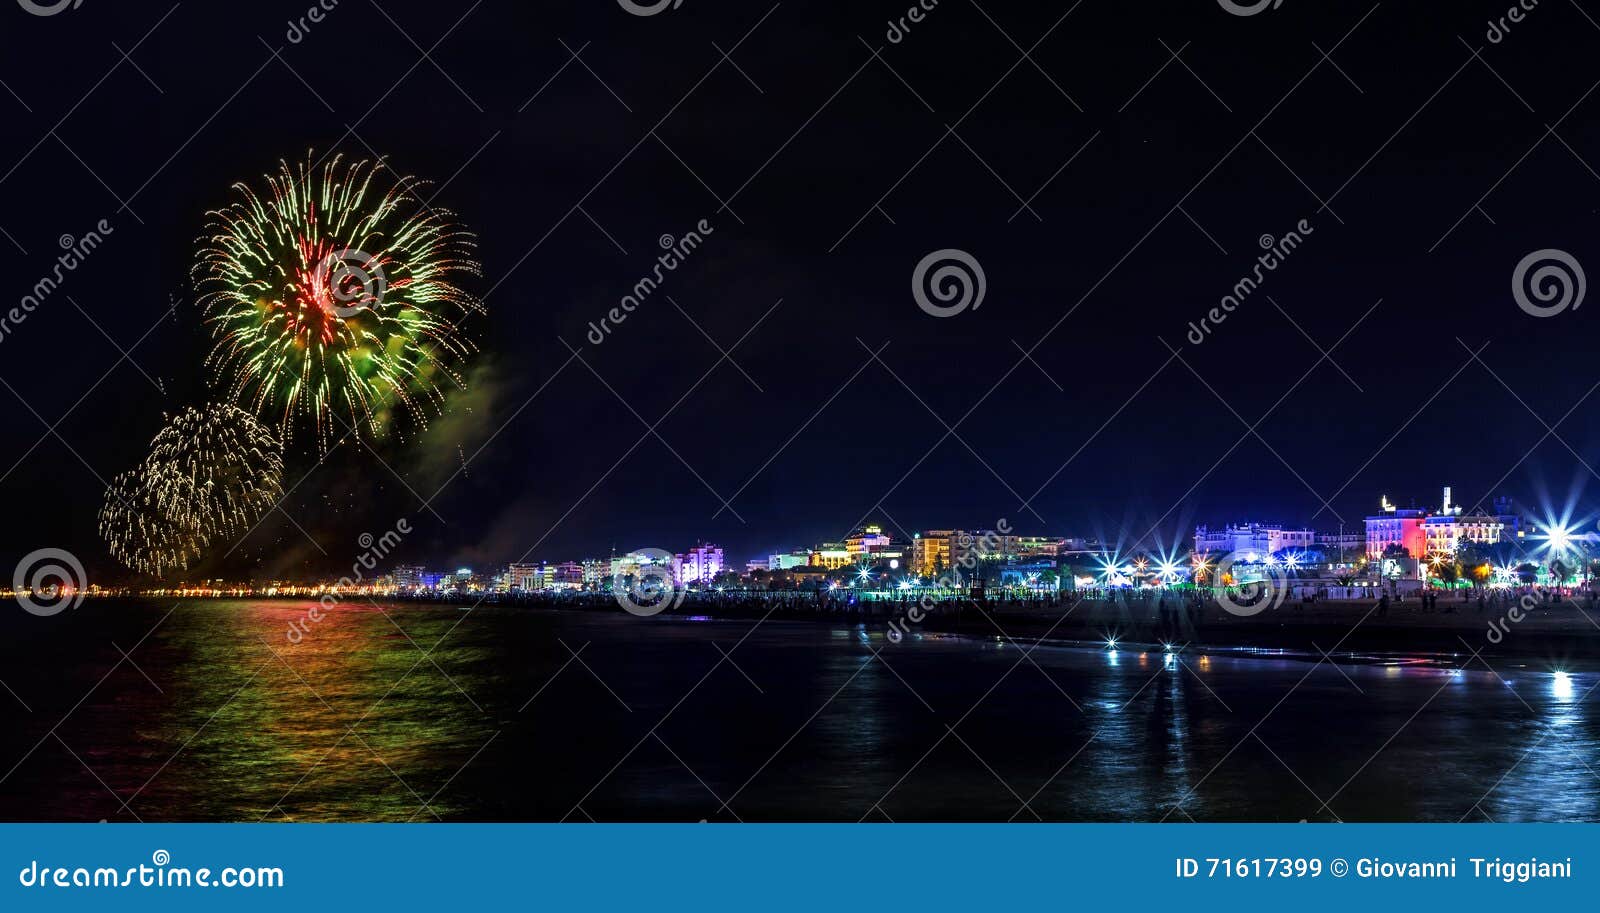 fireworks explosion night show on seafront. rimini